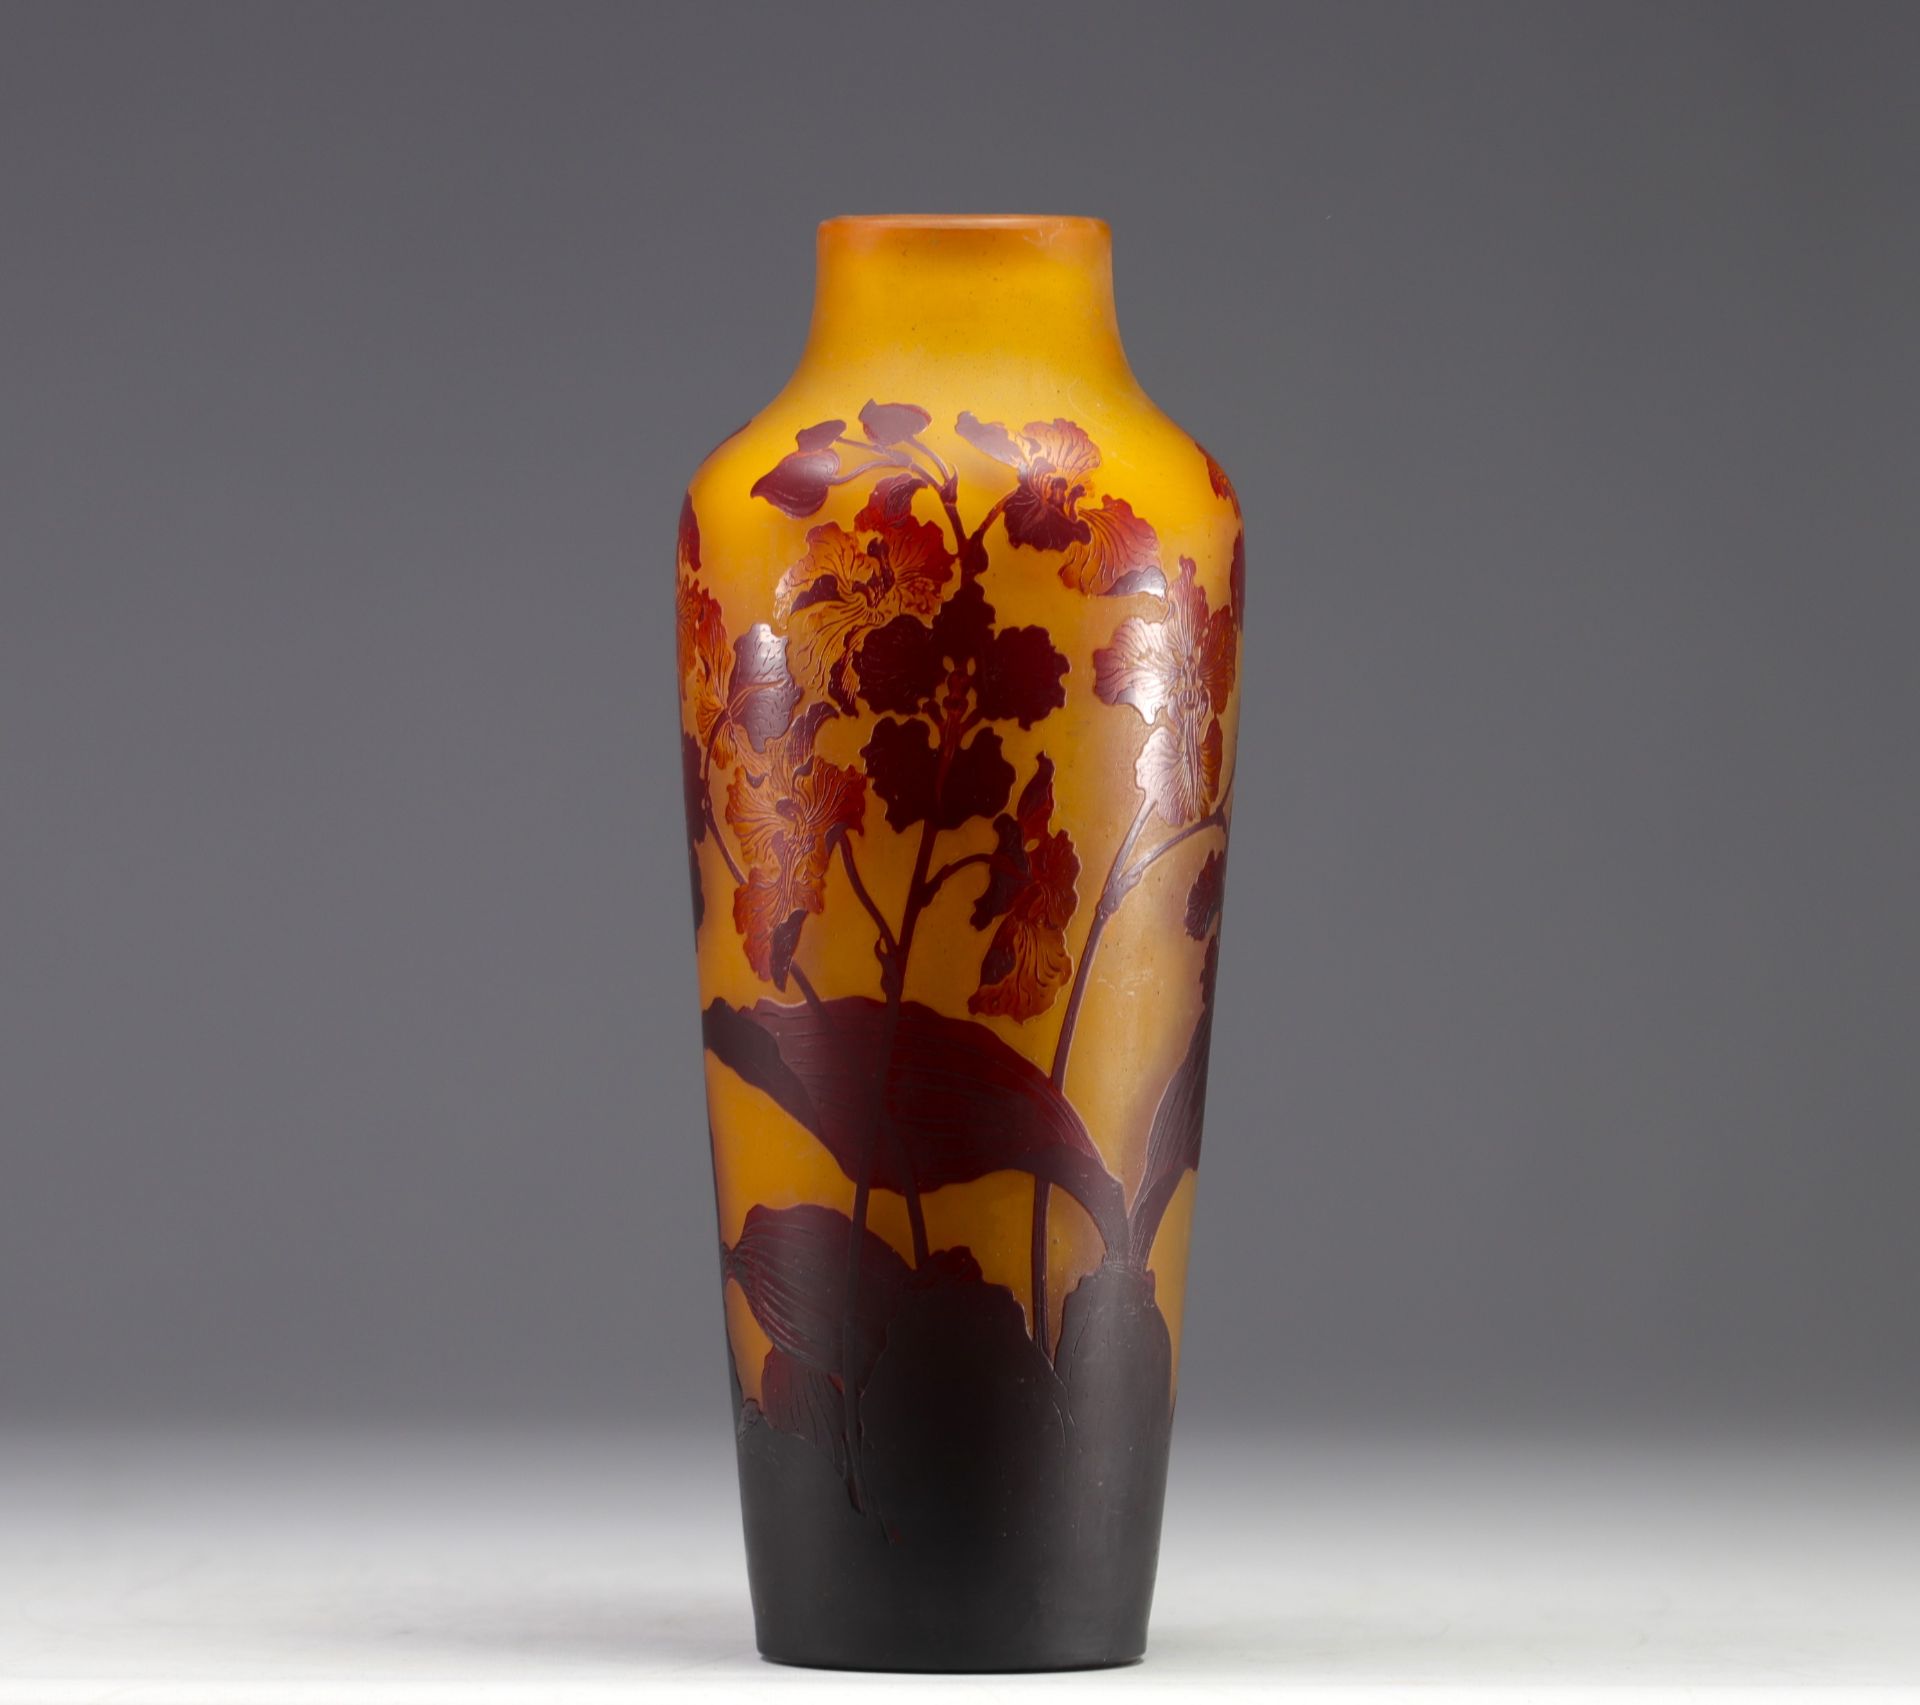 Emile GALLE - Multi-layered glass vase with iris design, signed.